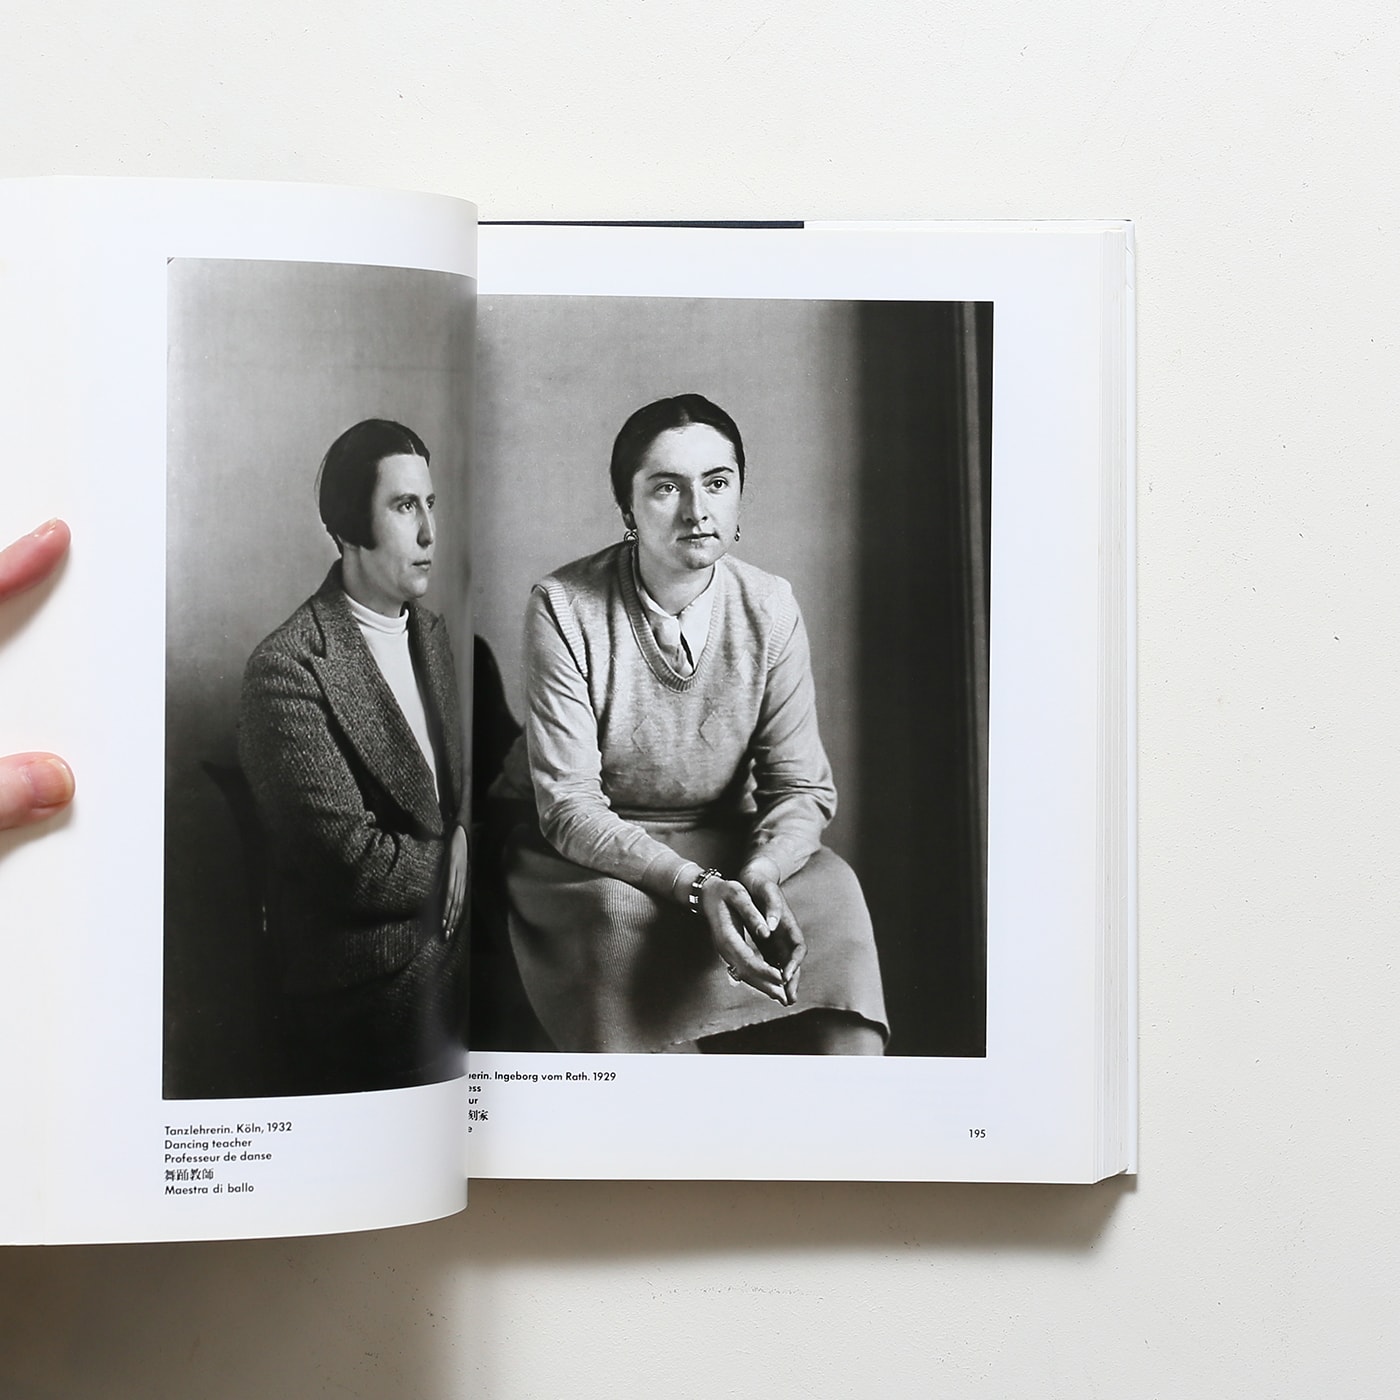 August Sander: Citizens of the 20th Century Portrait Photographs 1892-1952